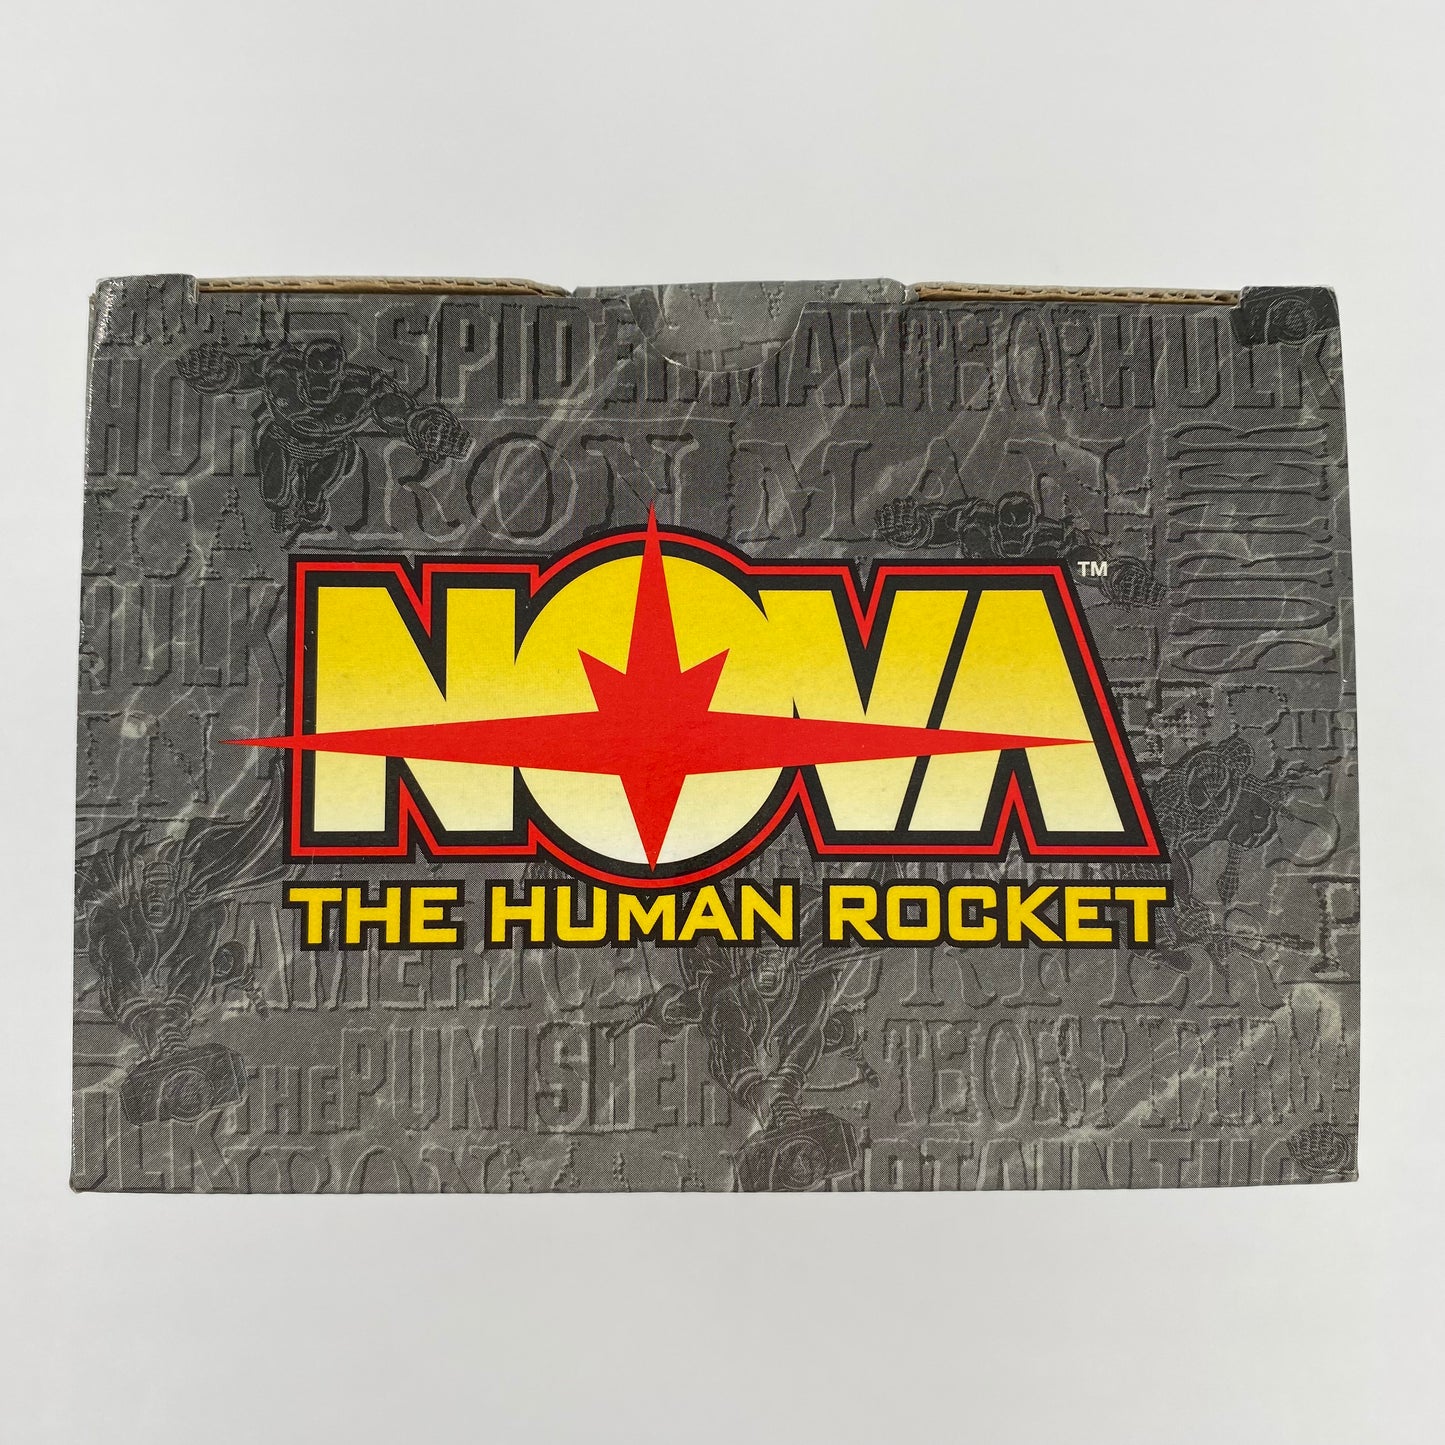 Nova The Human Rocket Marvel mini-bust (2005) Bowen Designs